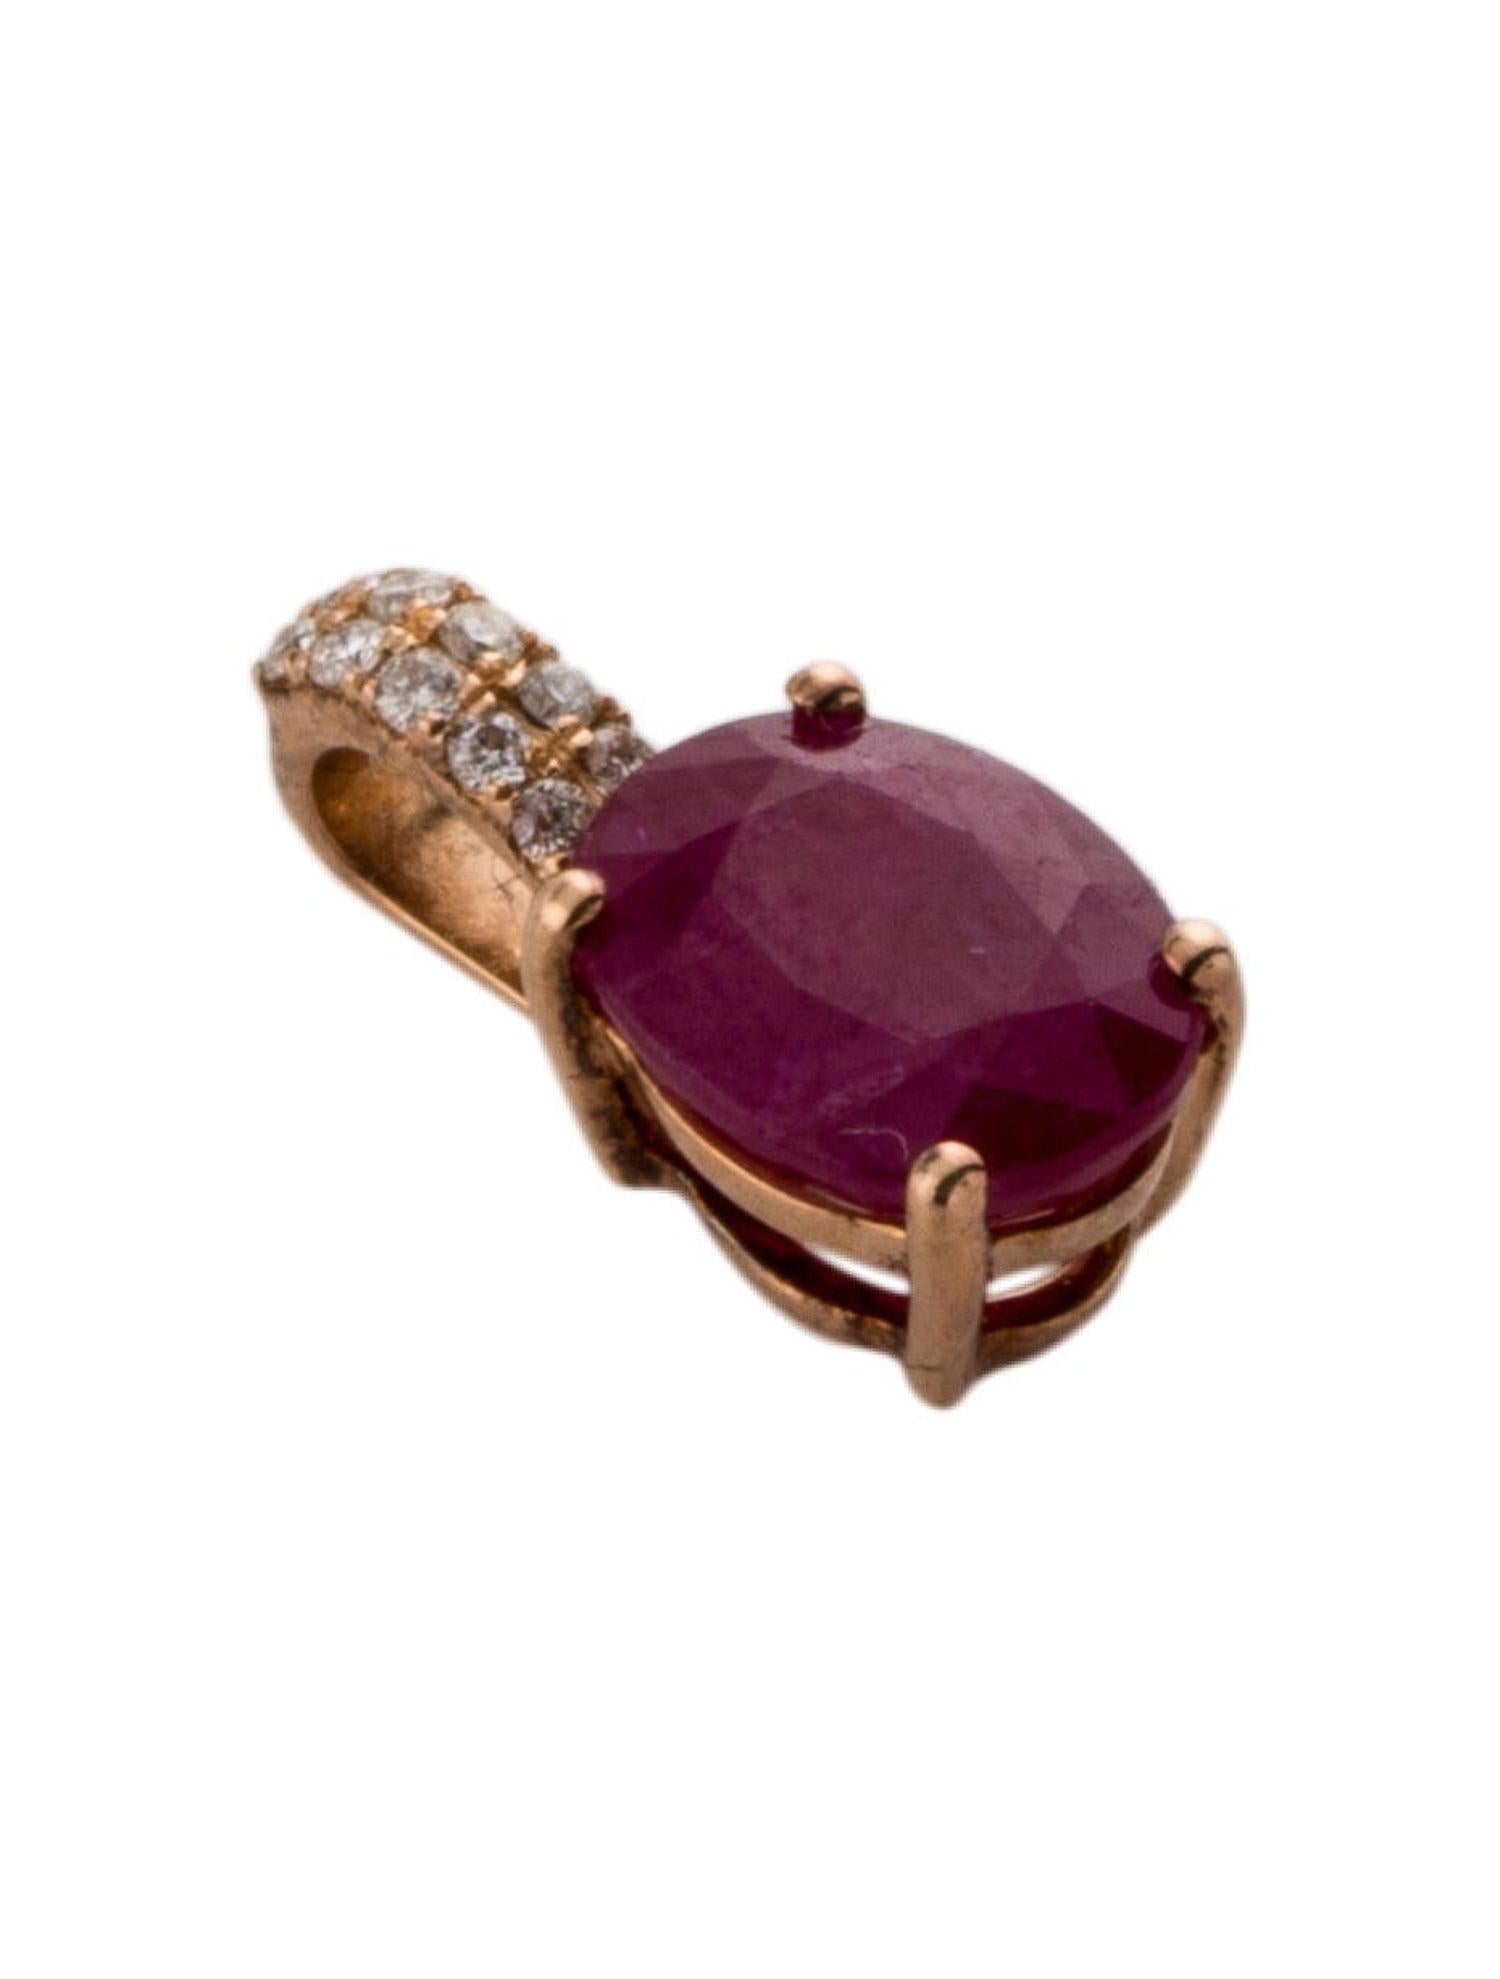 Brilliant Cut 18K 1.82ct Ruby & Diamond Pendant - Elegant & Timeless Gemstone Statement Piece For Sale